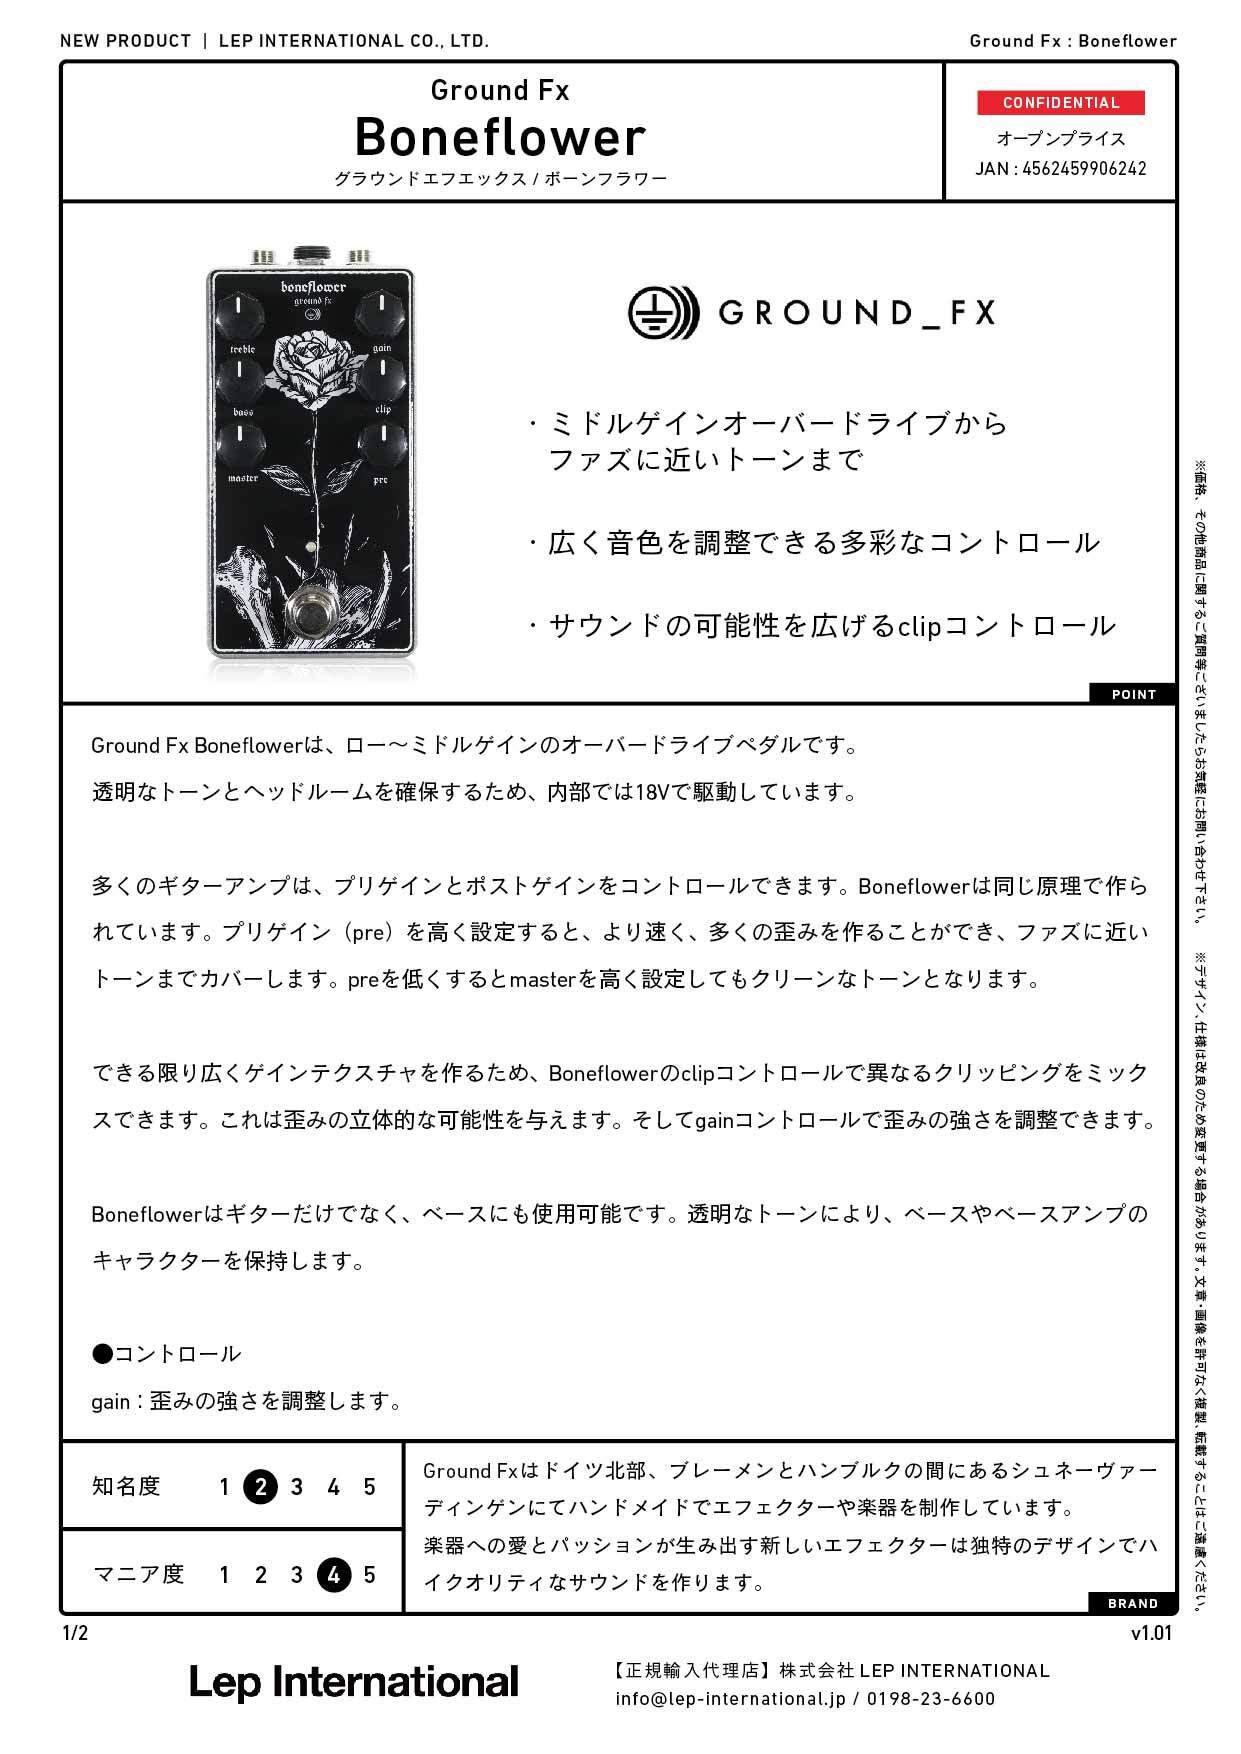 Ground Fx / Boneflower